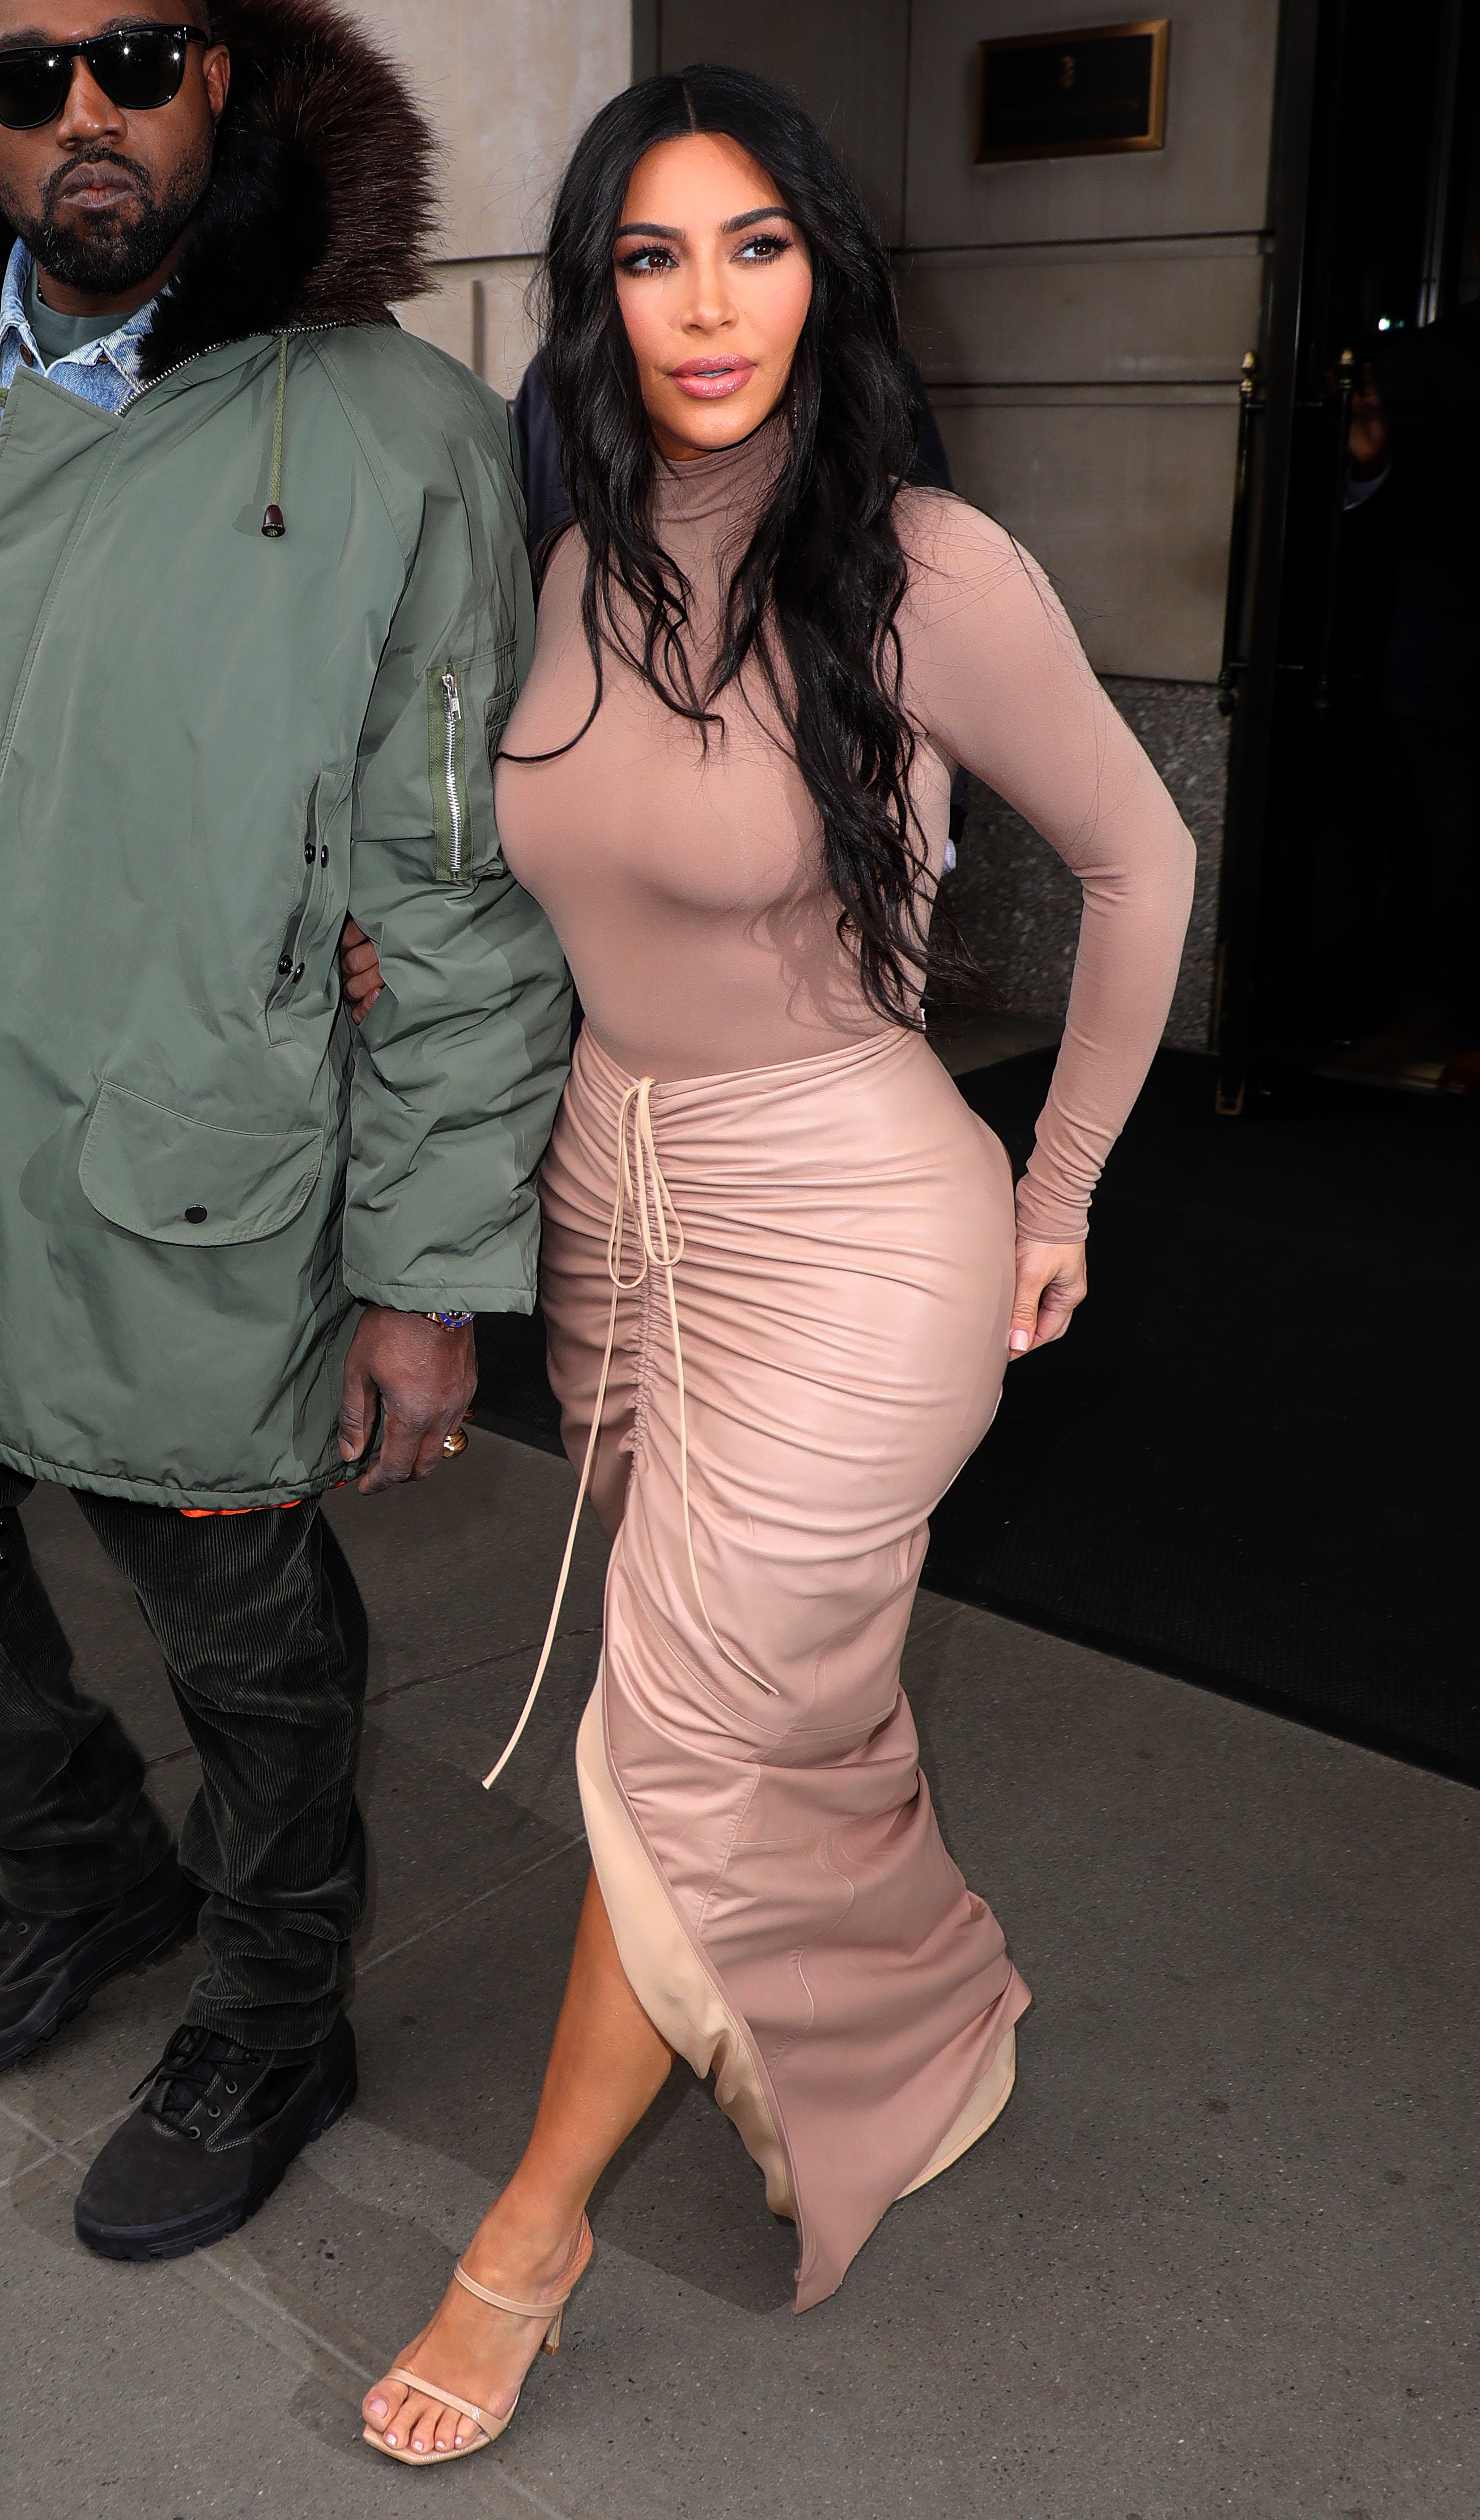 Kim Kardashian Skims Launch Event at Nordstrom February 5, 2020 – Star Style